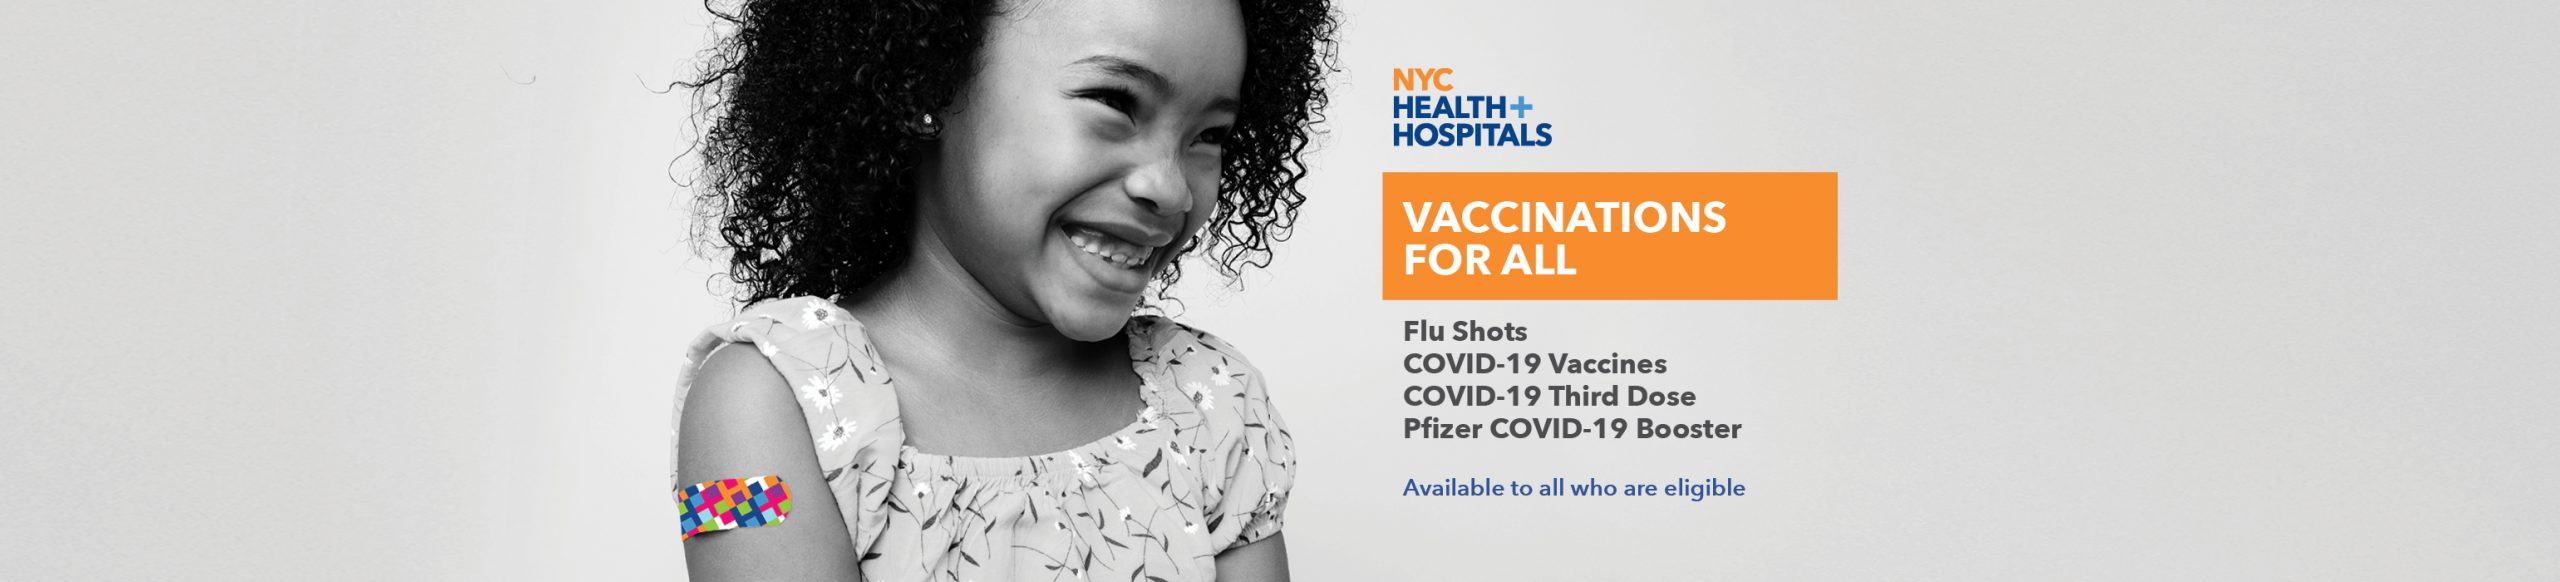 COVID-19 Vaccines at NYC Health + Hospitals 